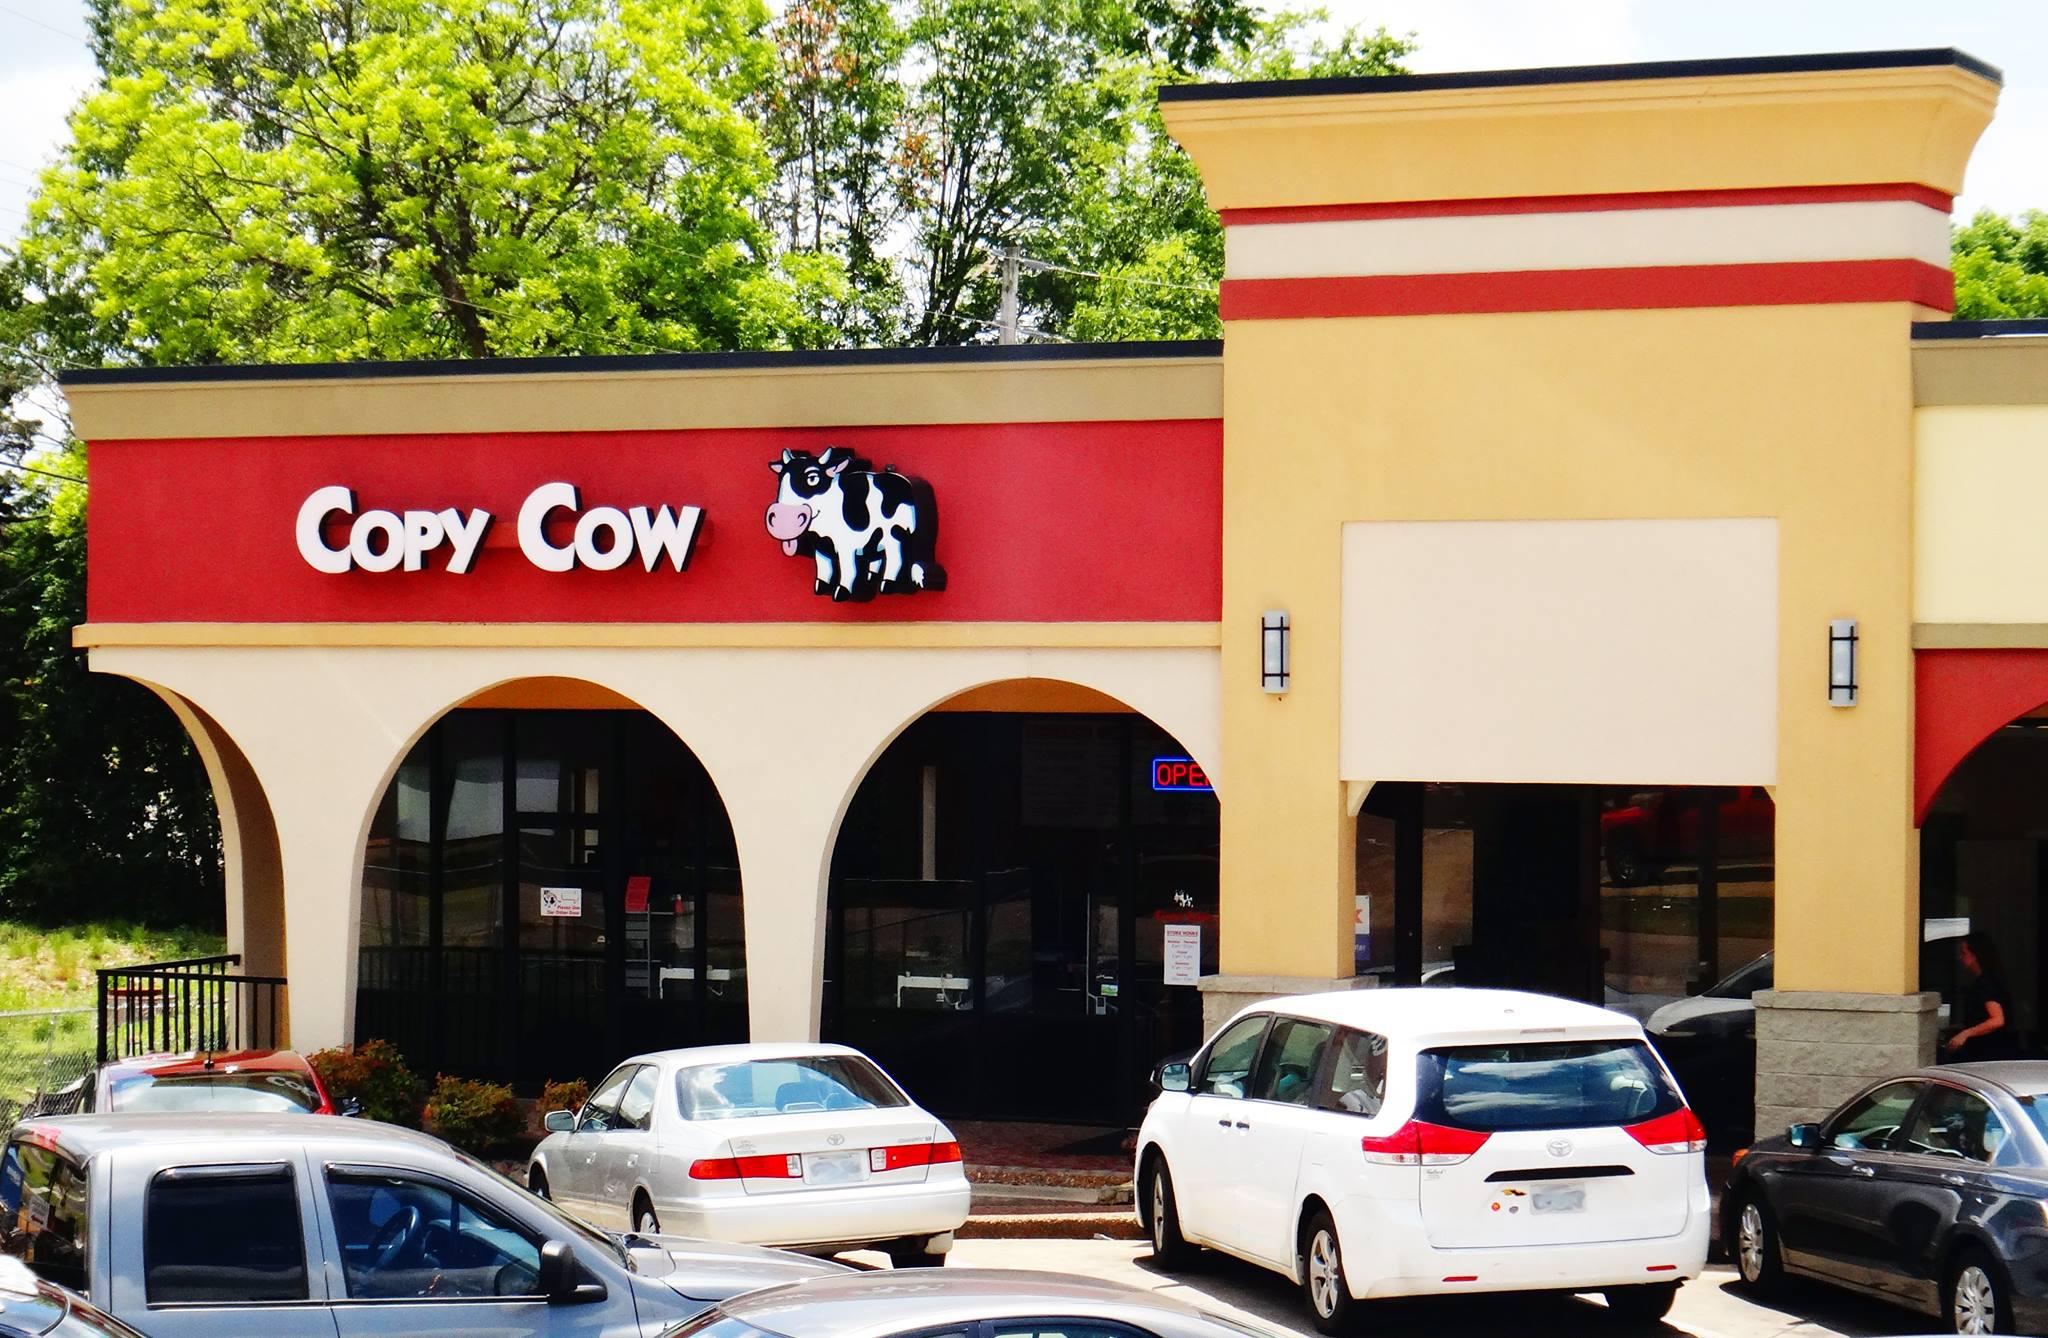 Copy Cow Photo